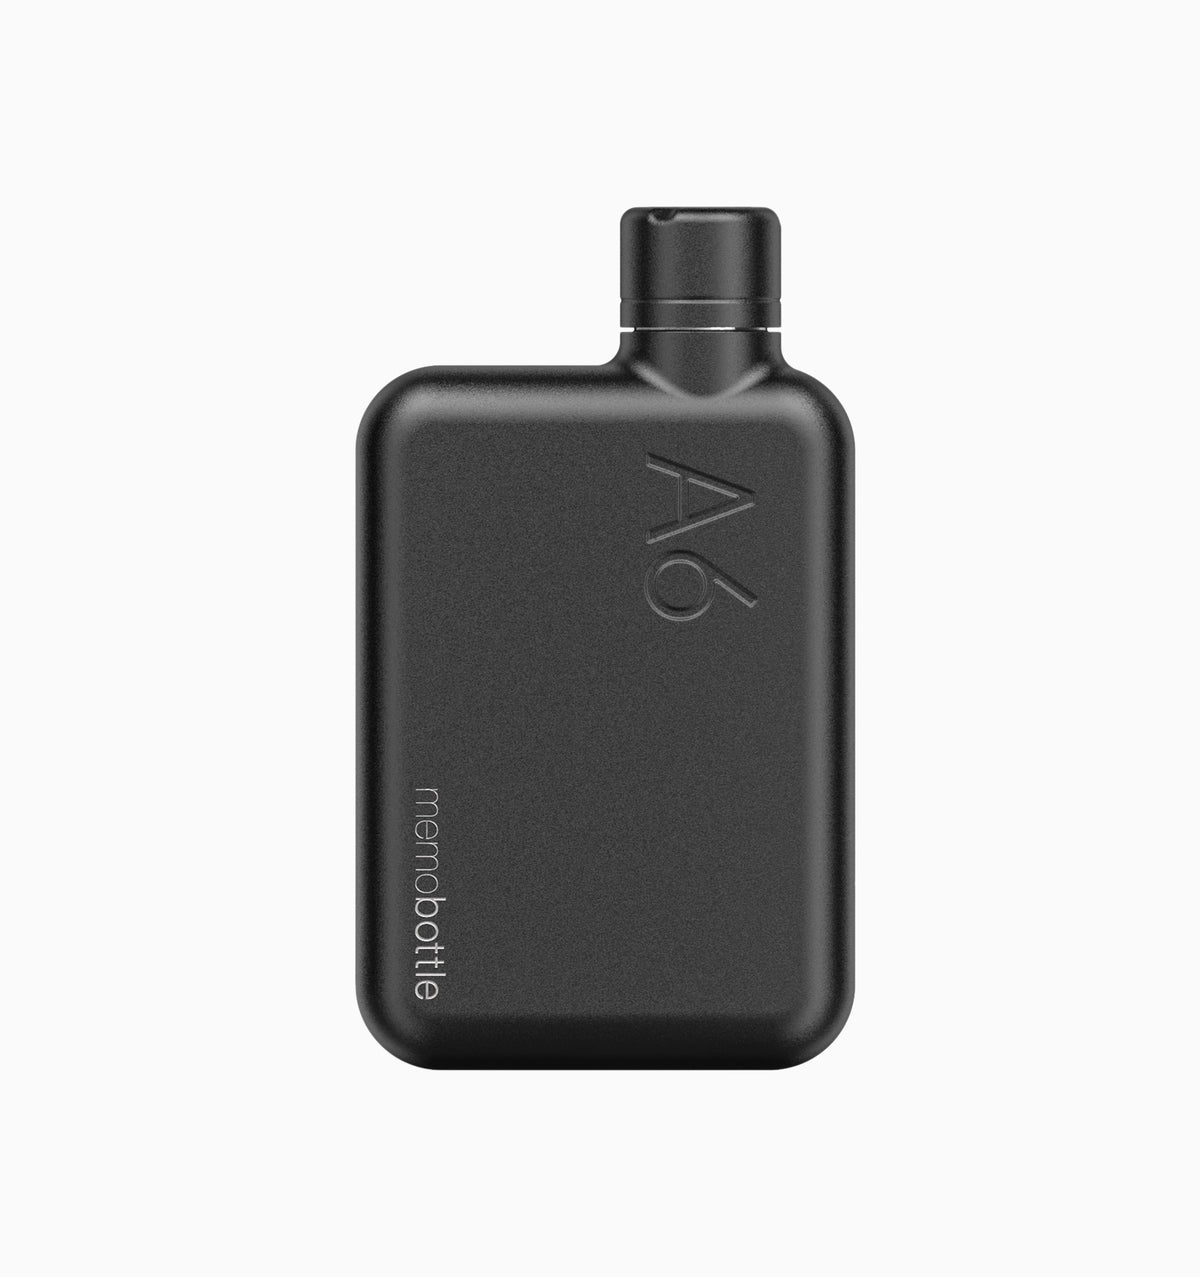 Memobottle A6 Stainless Steel Water Bottle - Black